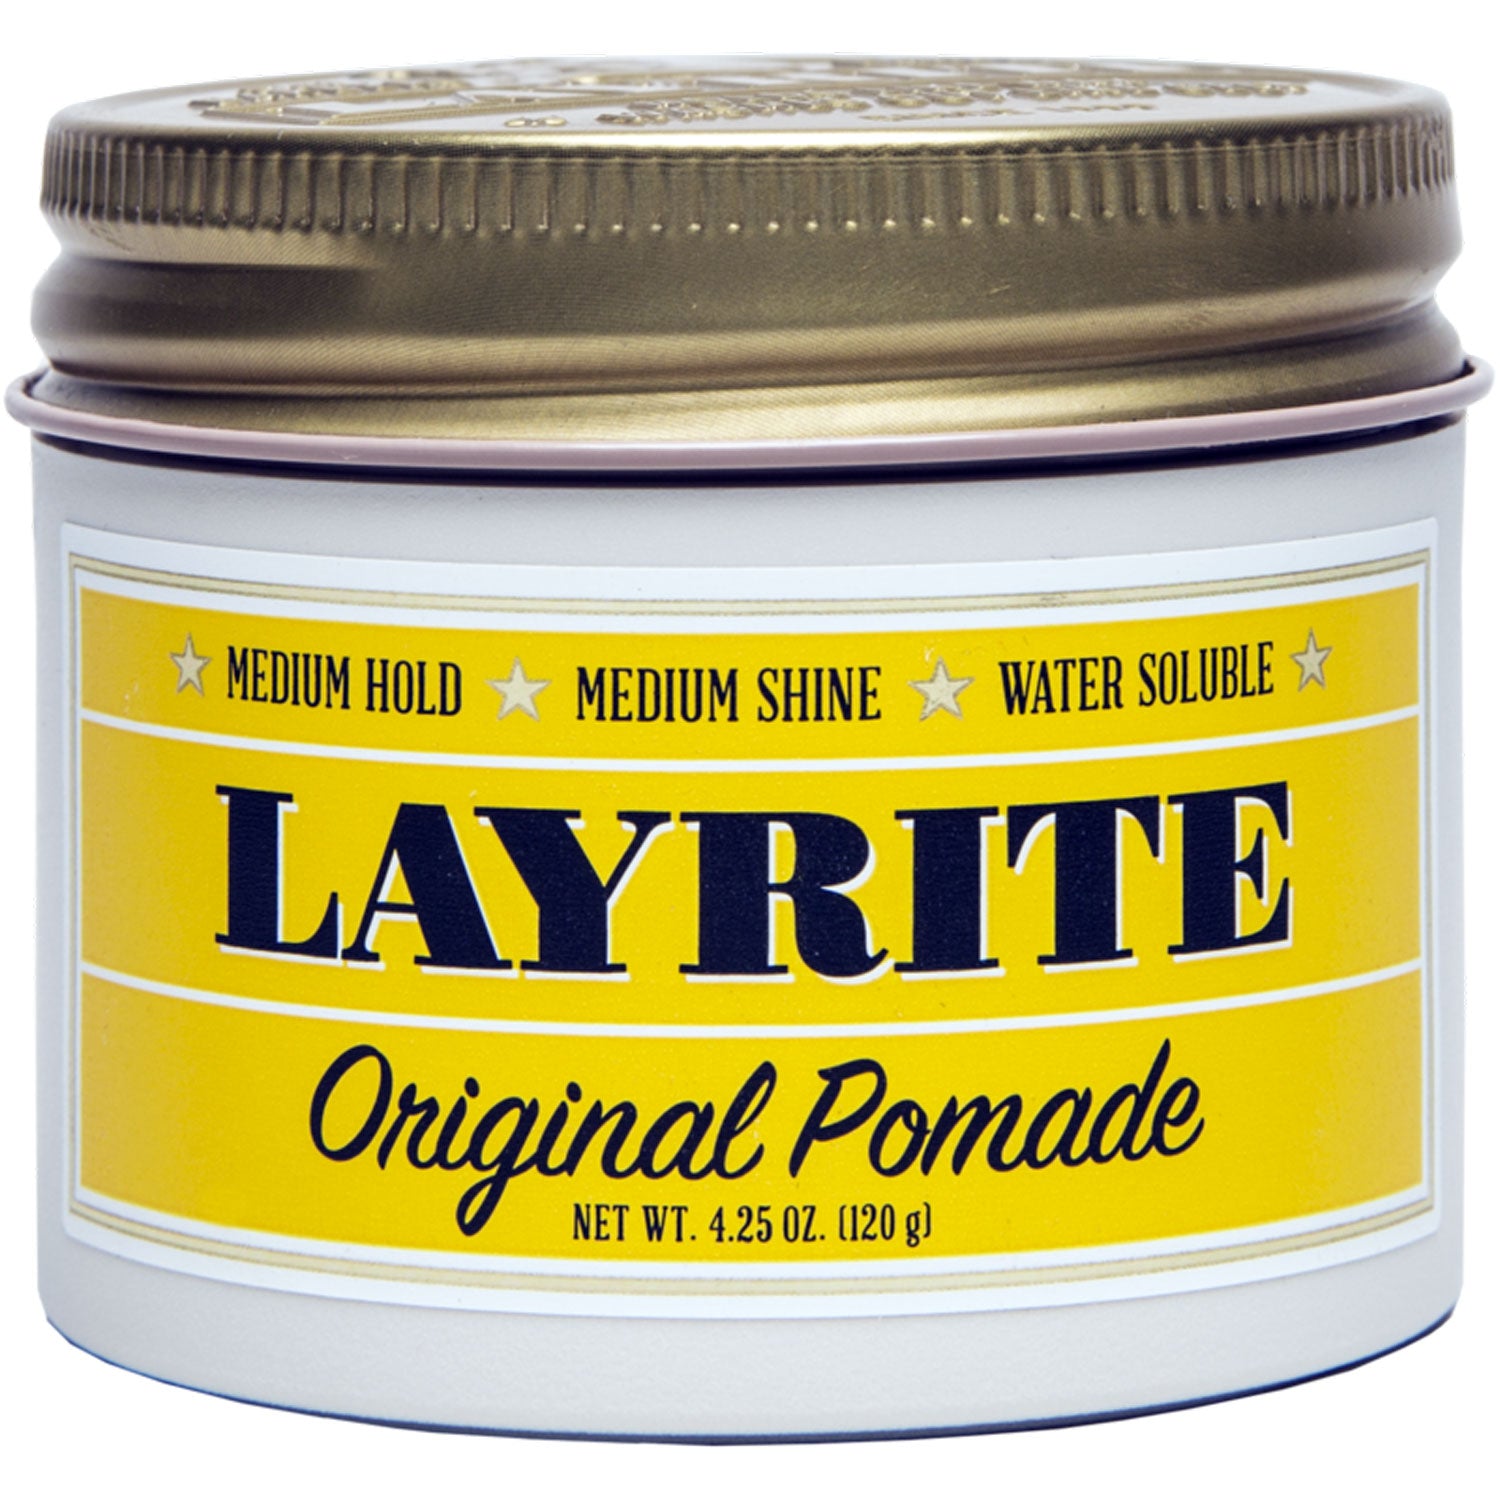 Layrite Original Pomade 120g | Strong Hold Medium Shine Styling Pomade - Orcadia